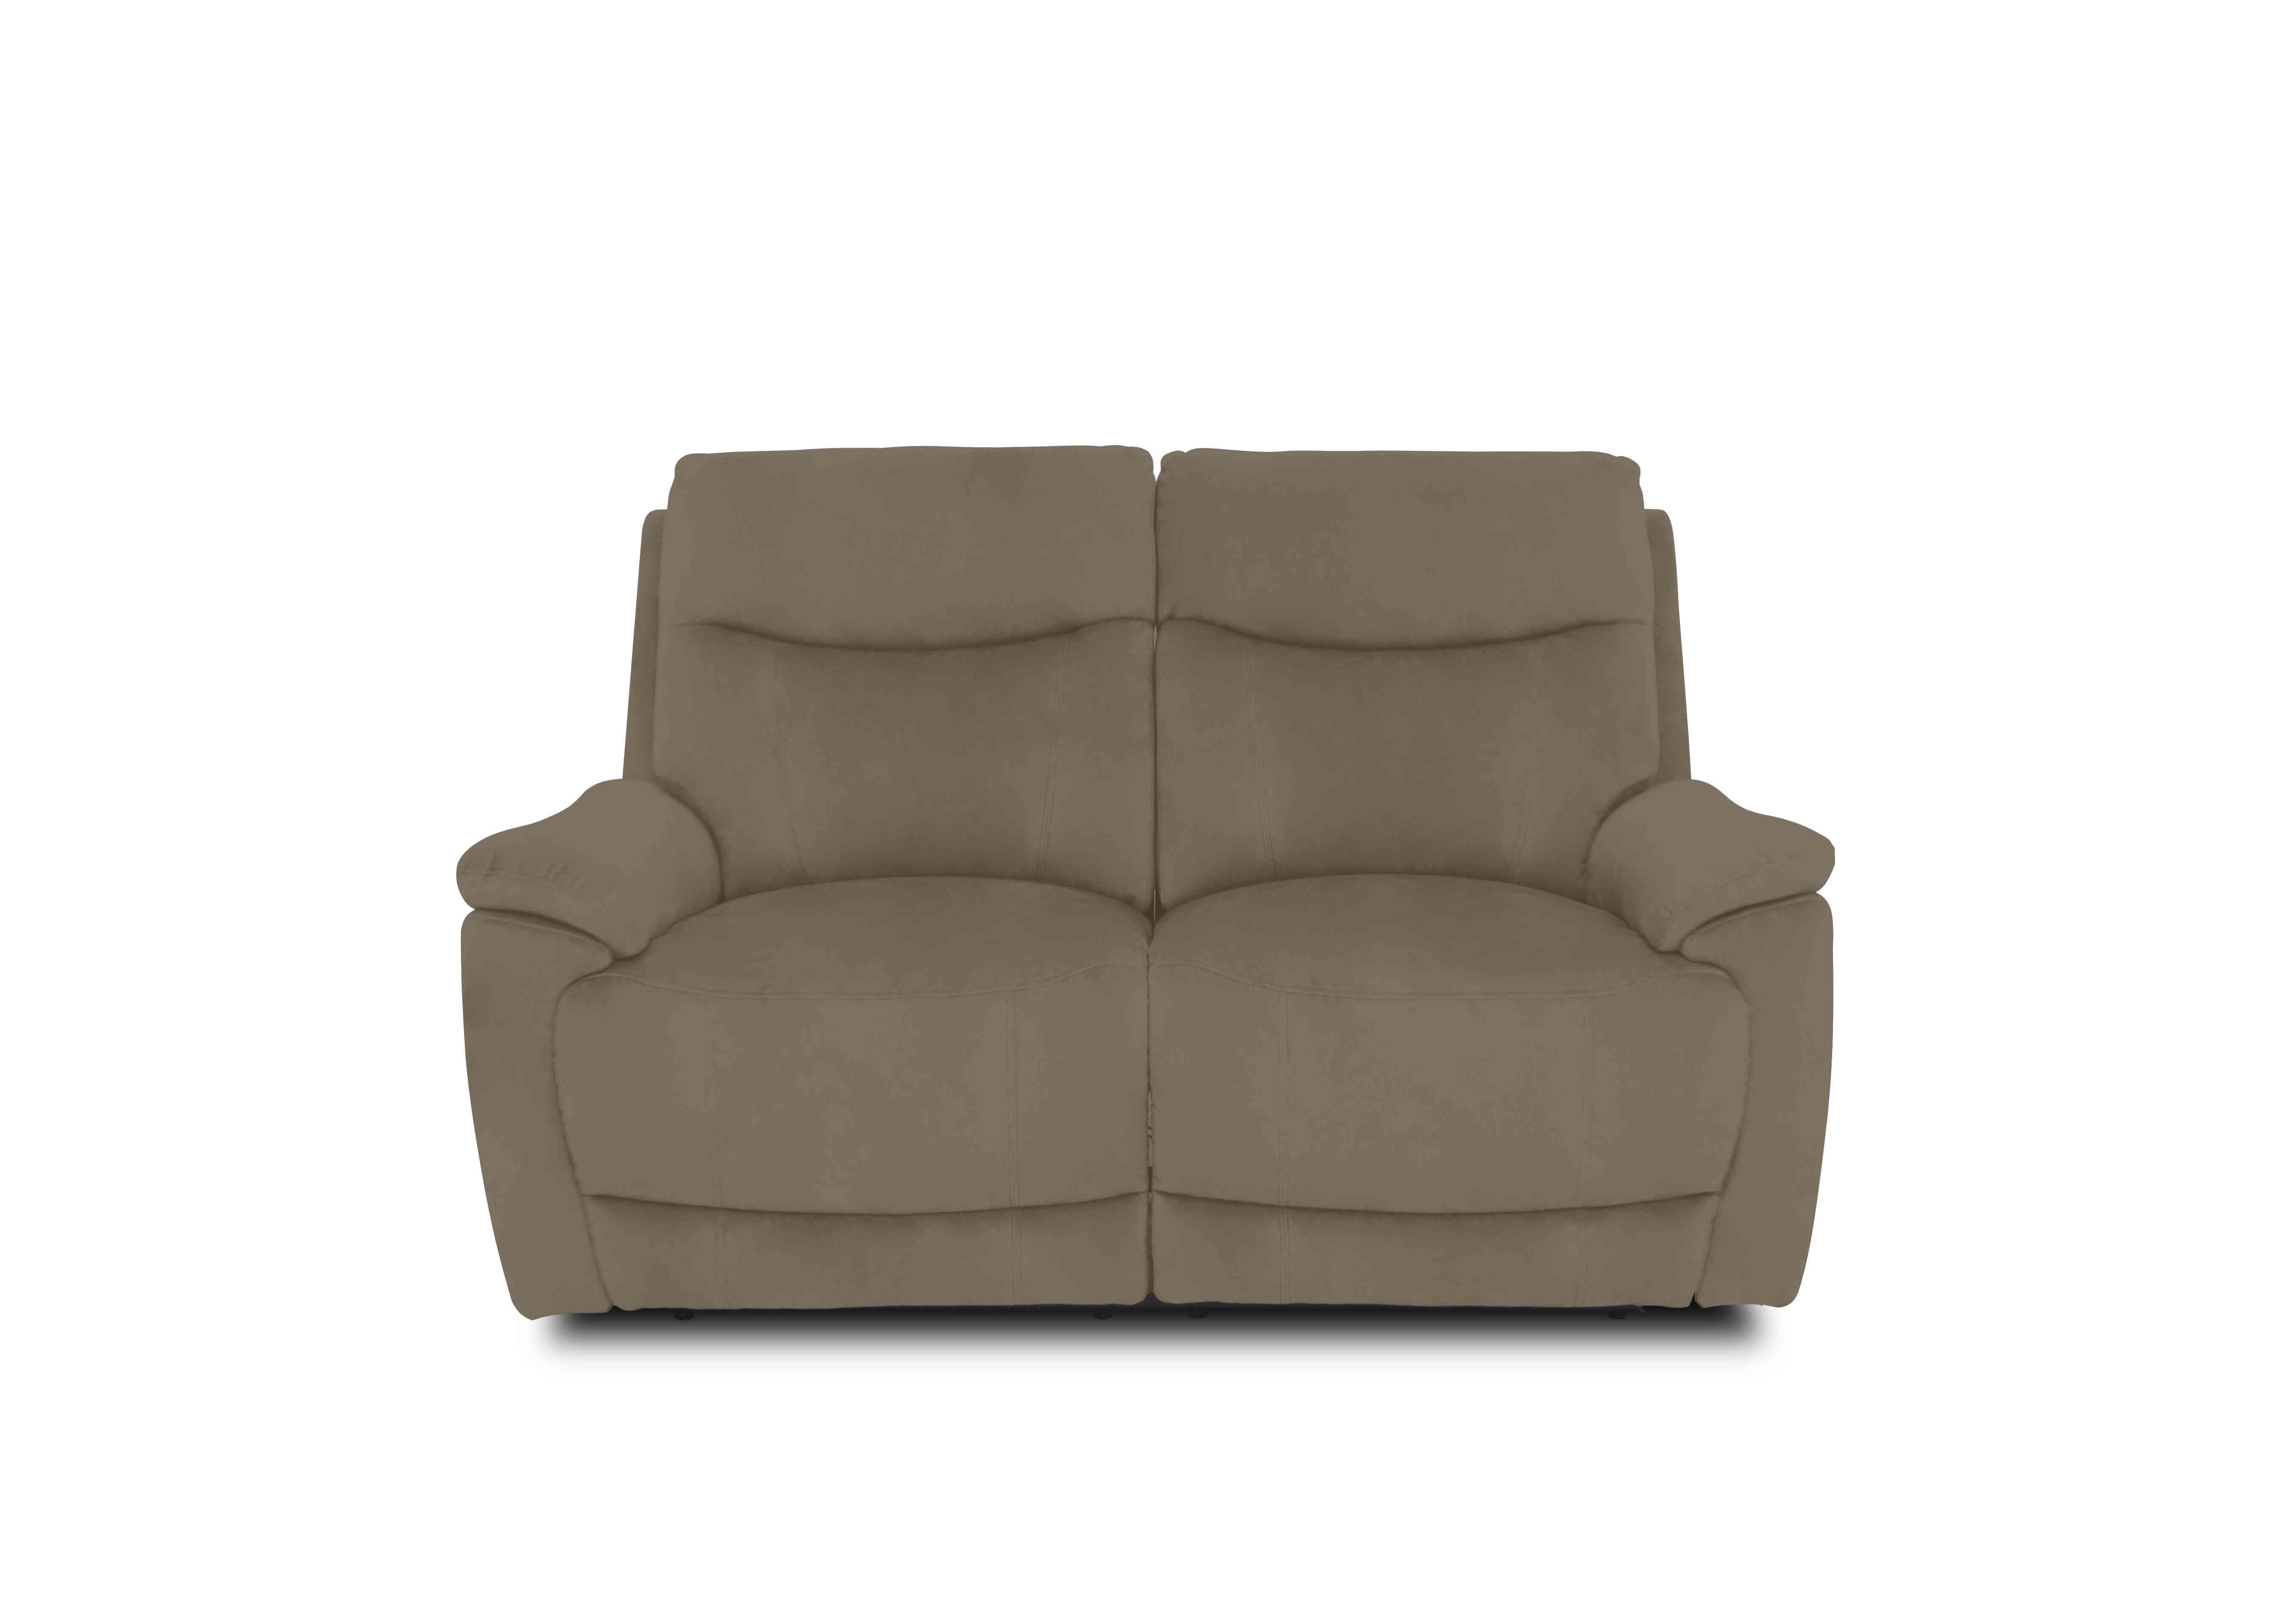 Sloane 2 Seater Fabric Sofa in 51014 Opulence Cedar on Furniture Village